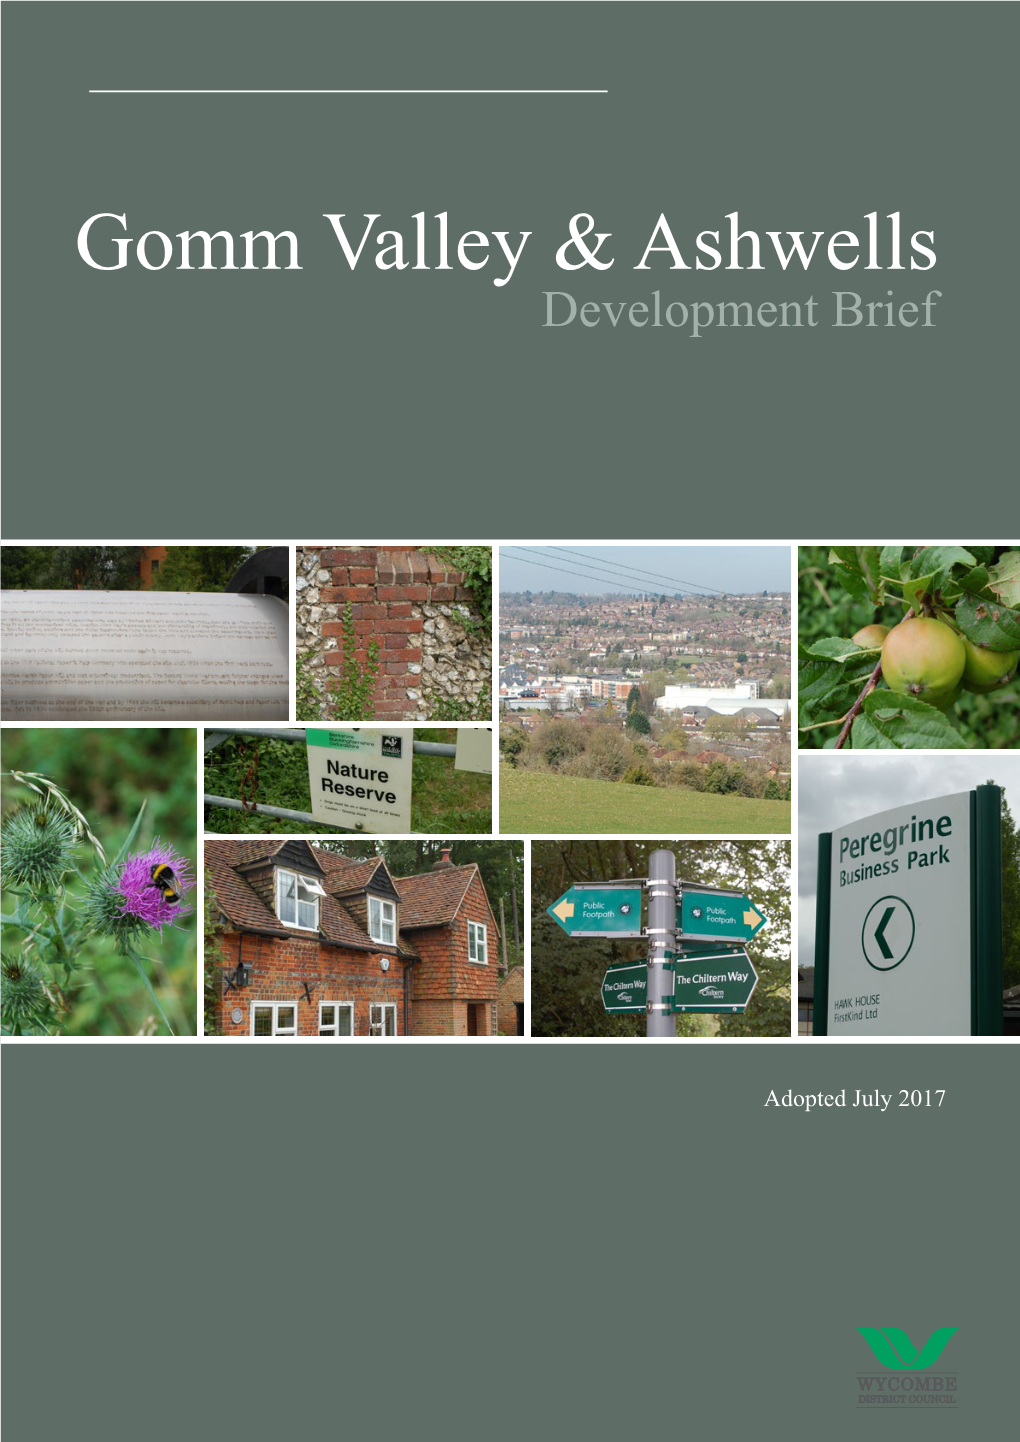 Gomm Valley & Ashwells